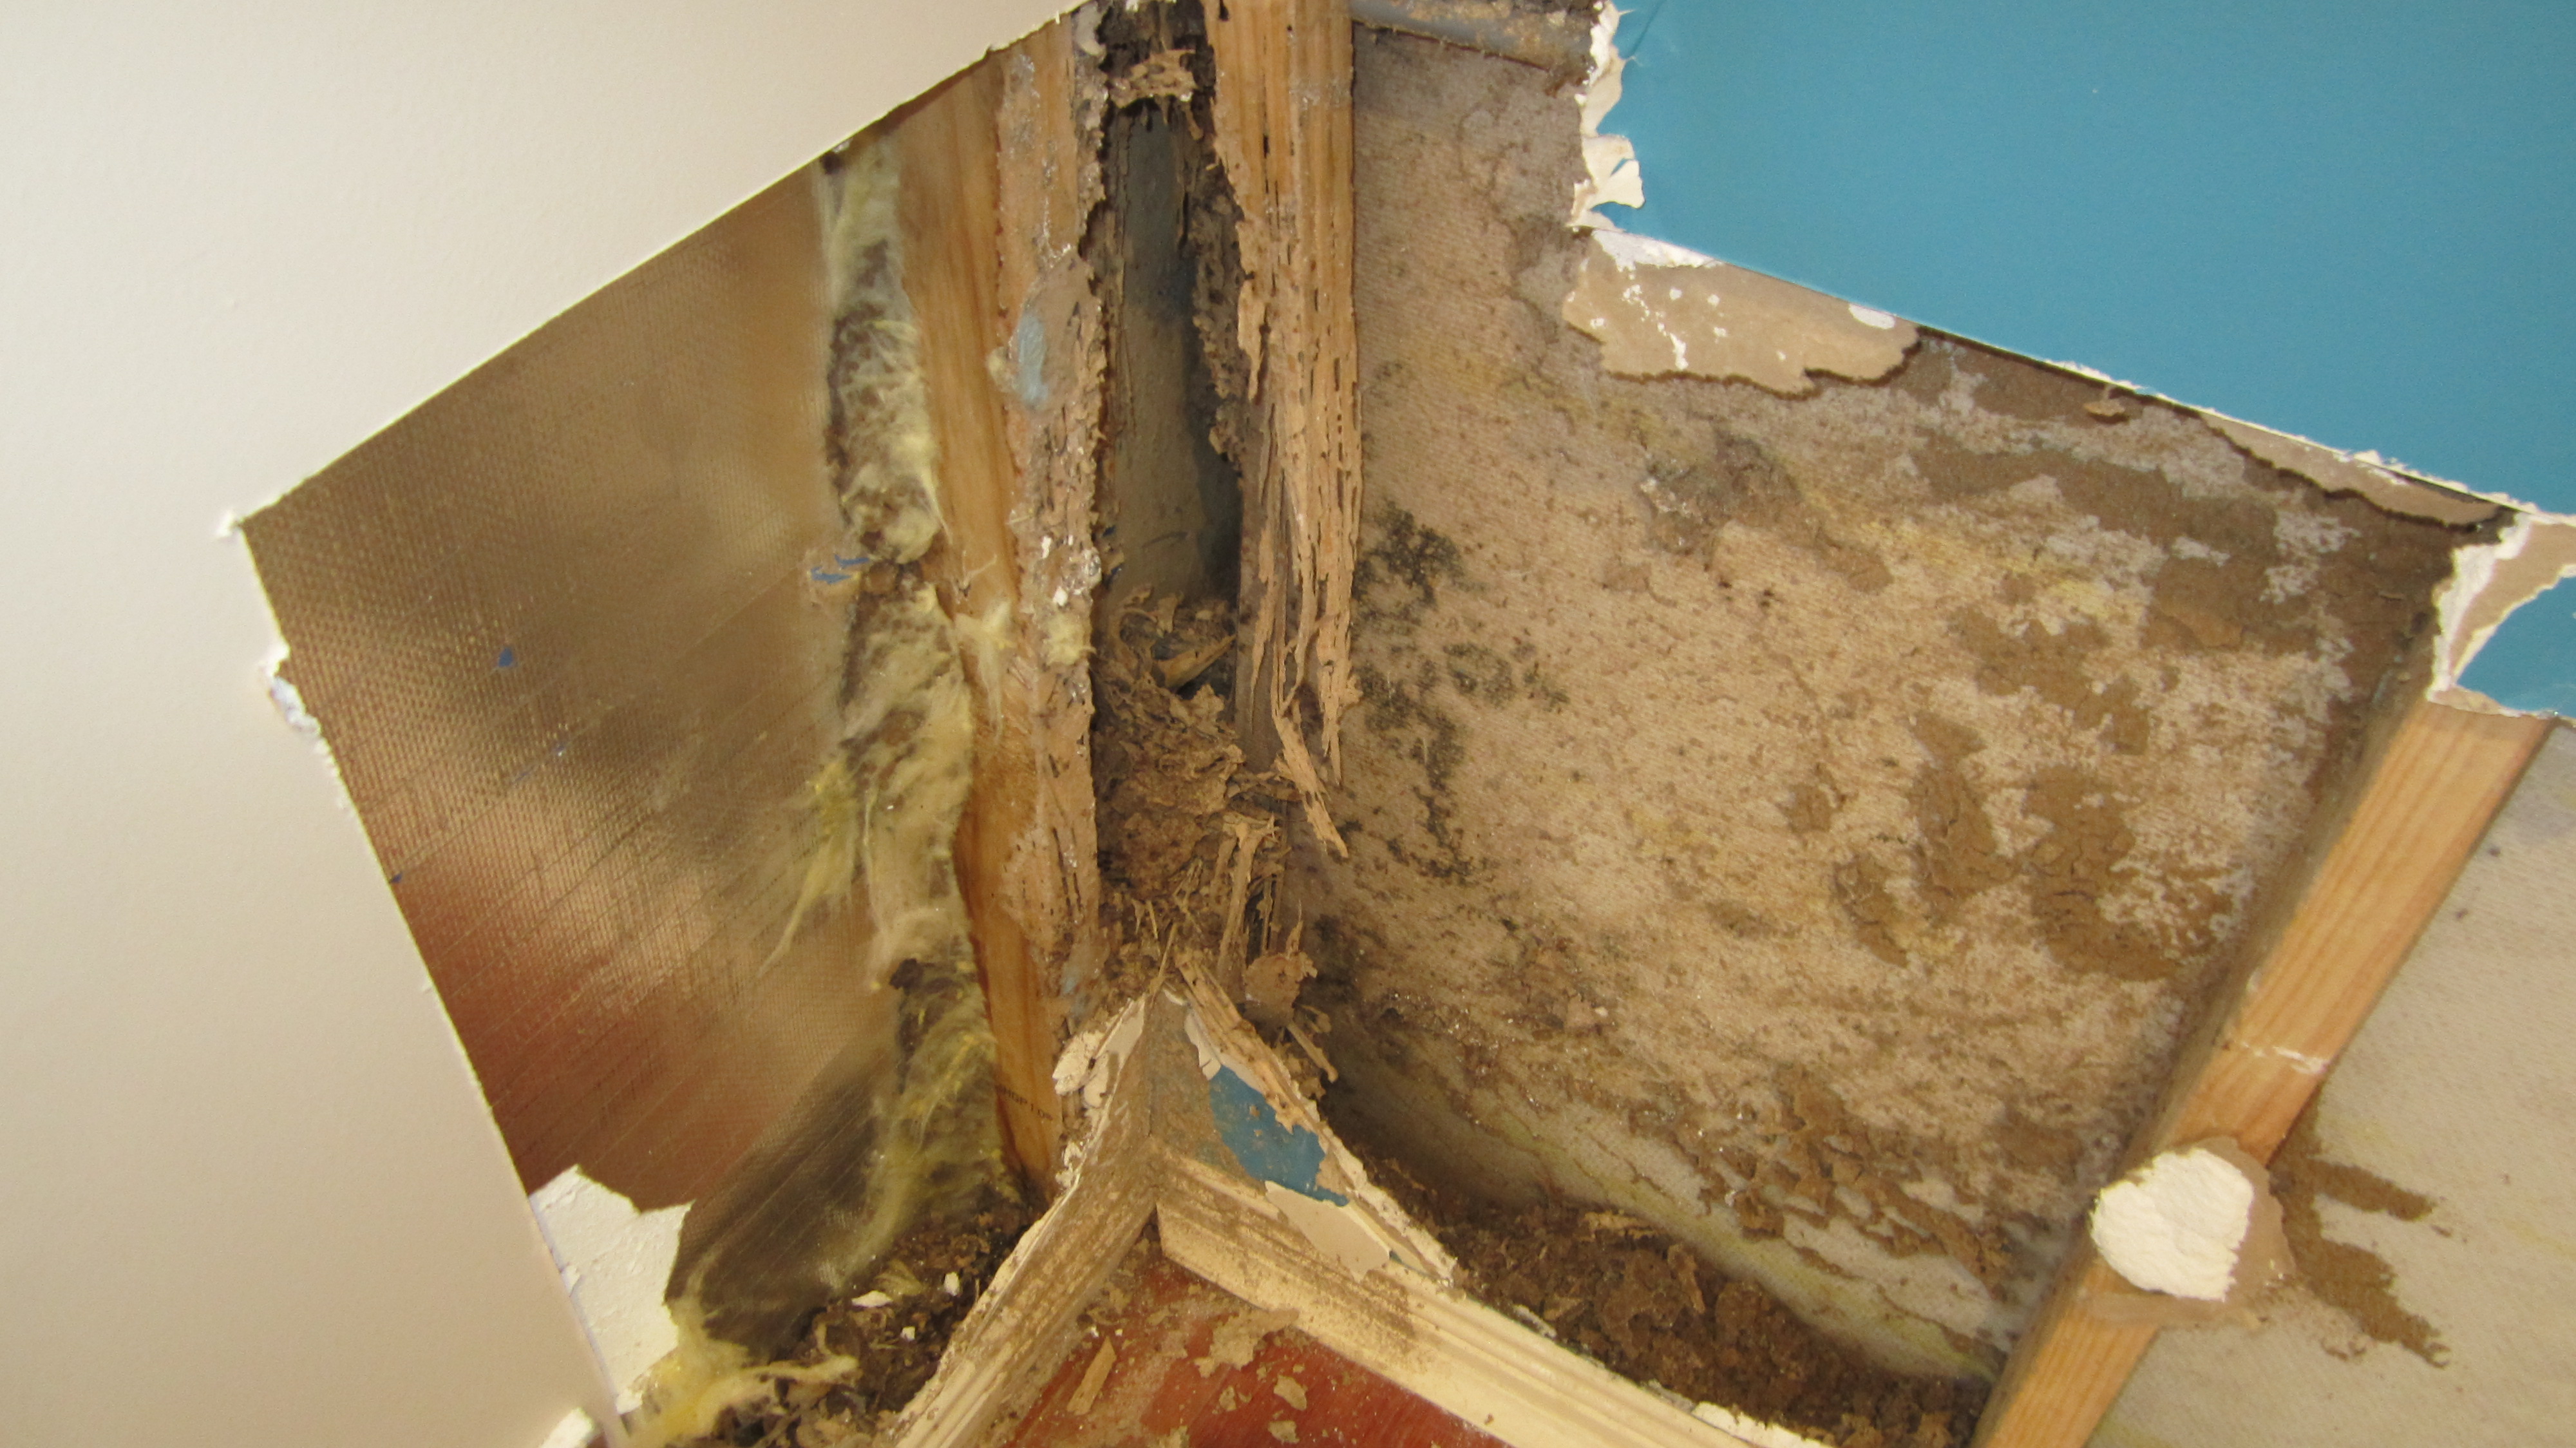 Termite damage in the corner